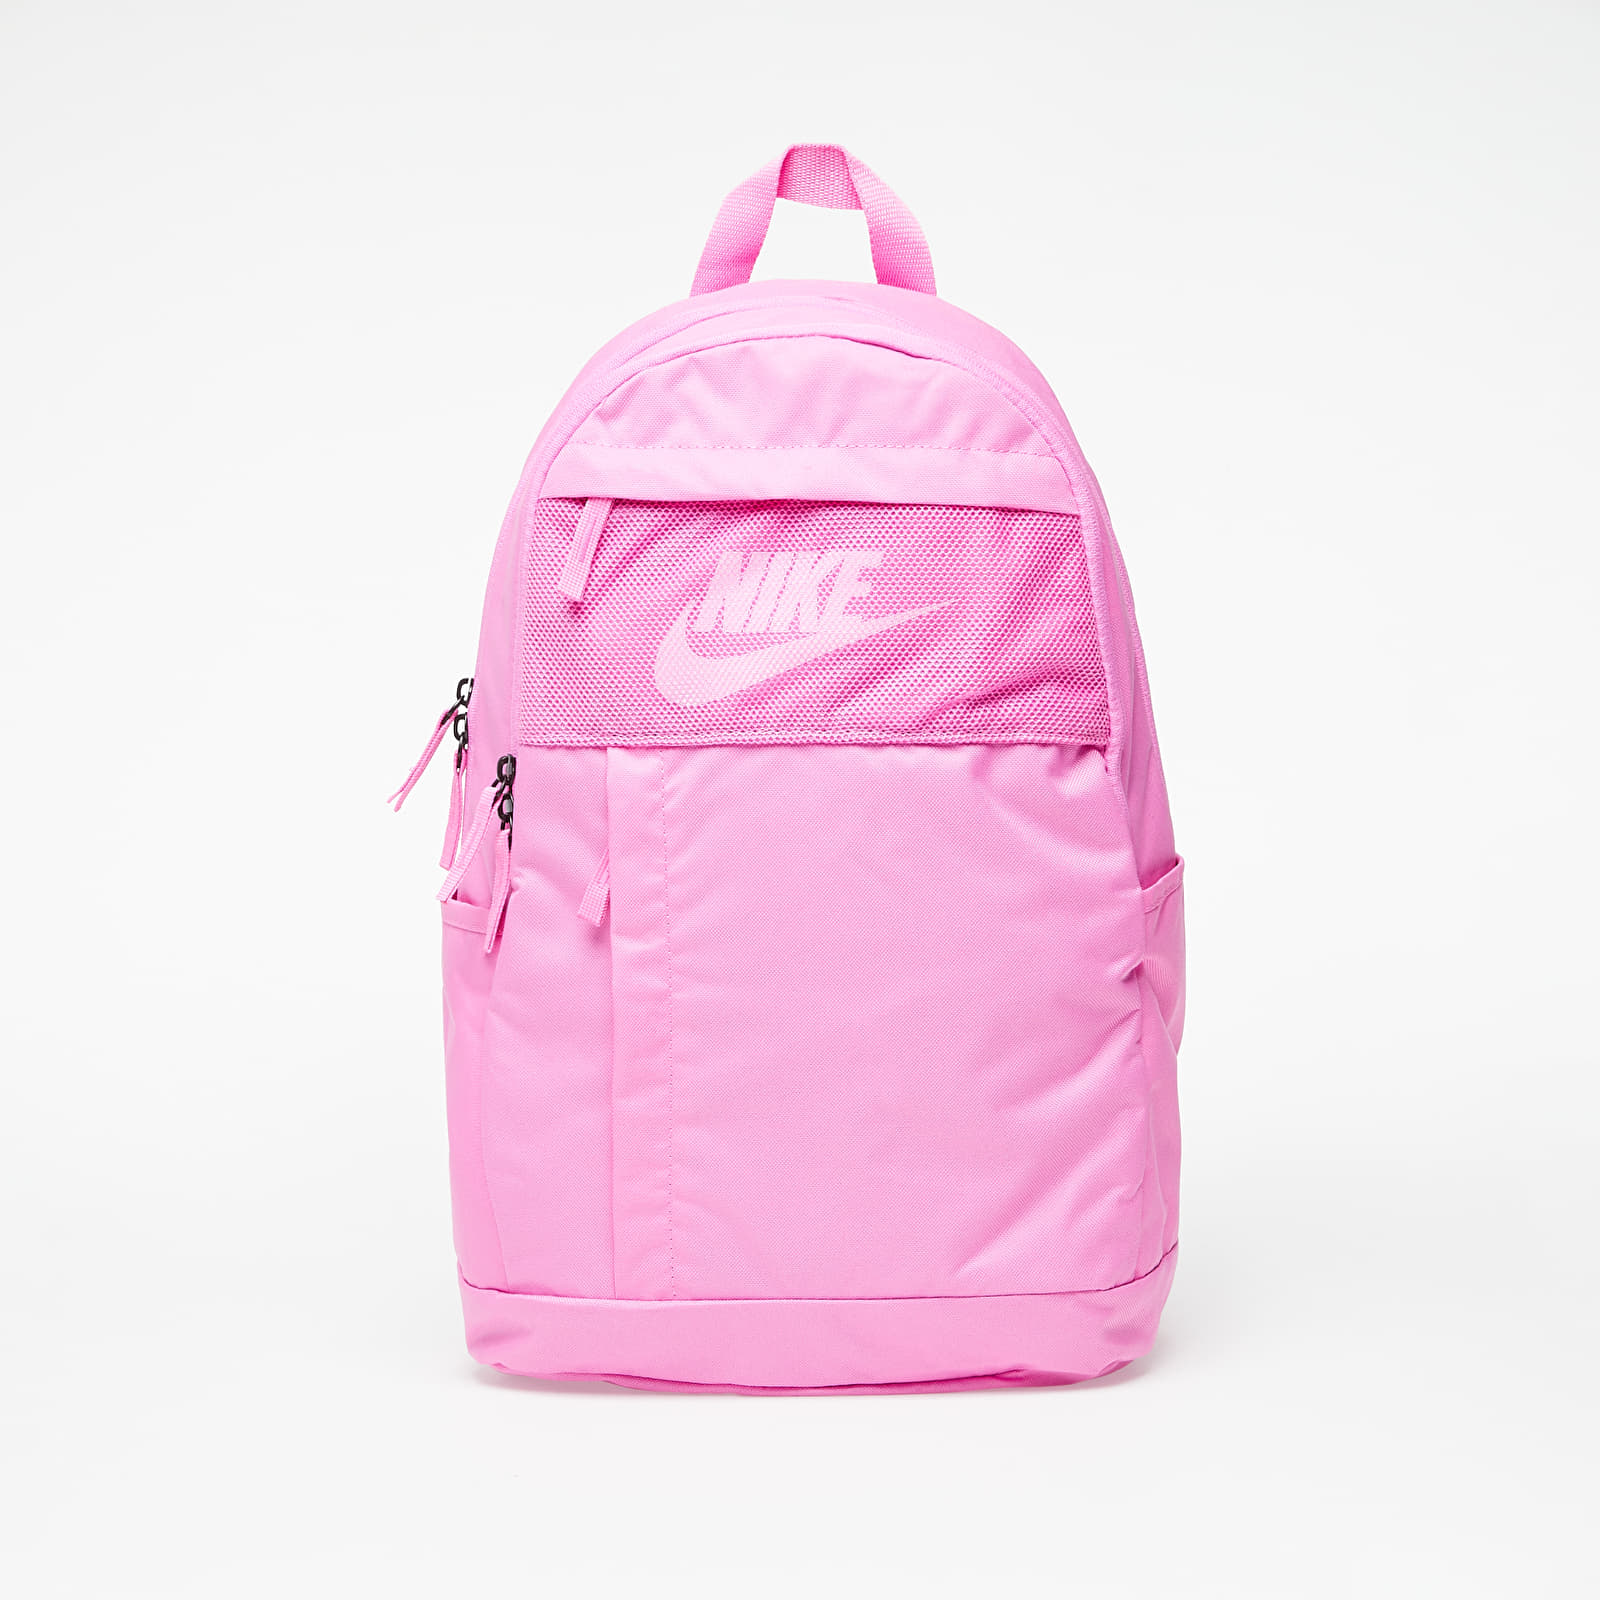 Раници Nike Elemental LBR Backpack China Rose/ China Rose/ White 440665